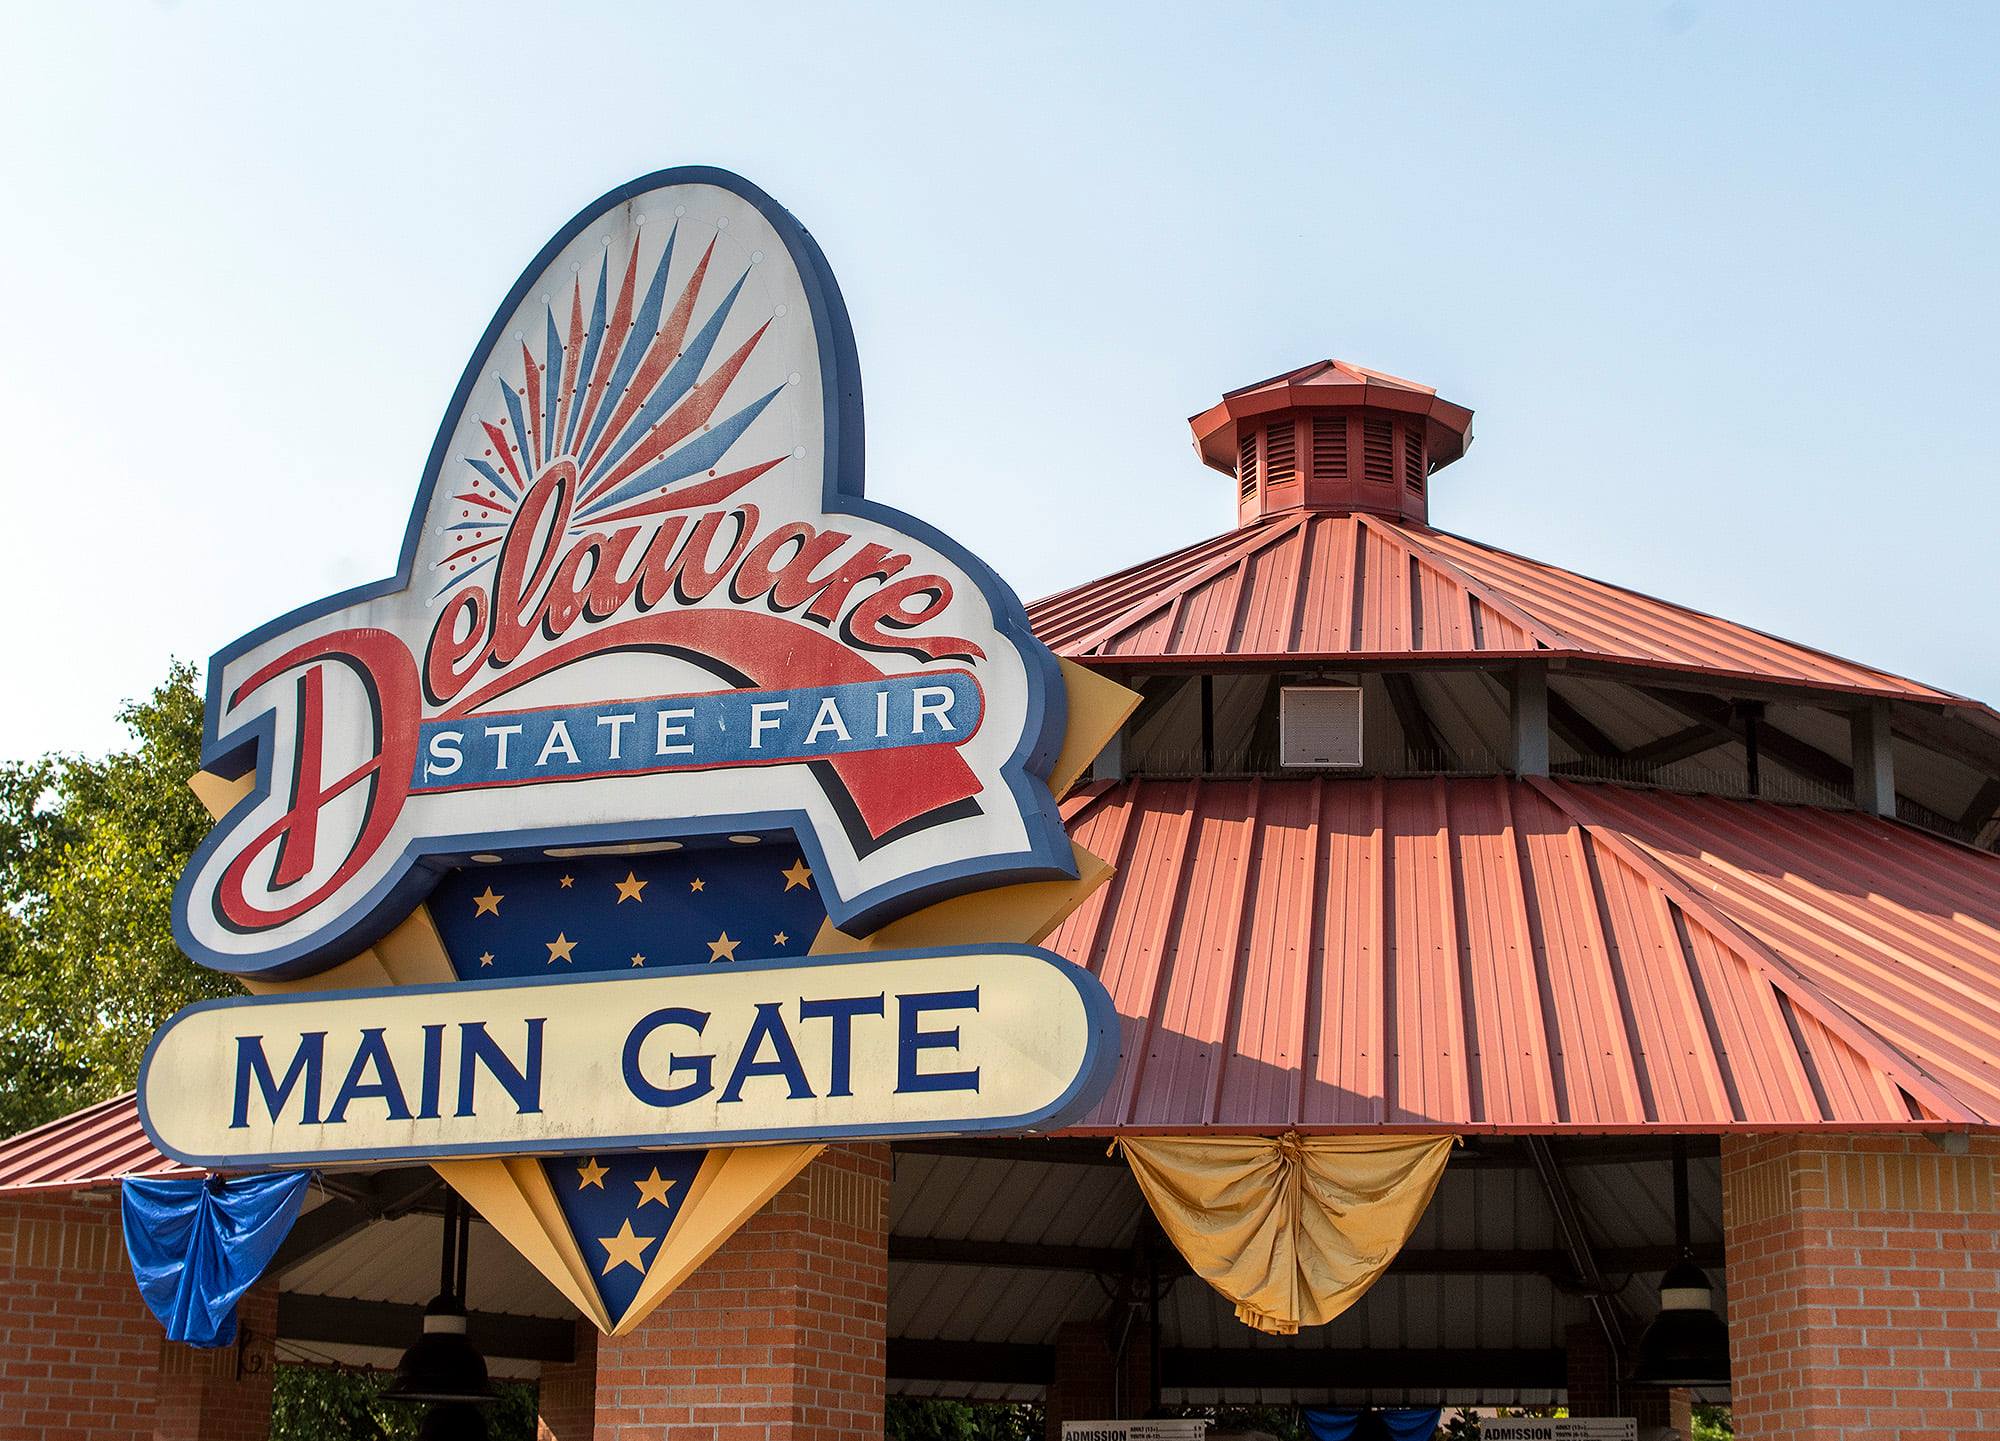 Delaware State Fair announces headline entertainment for 2022